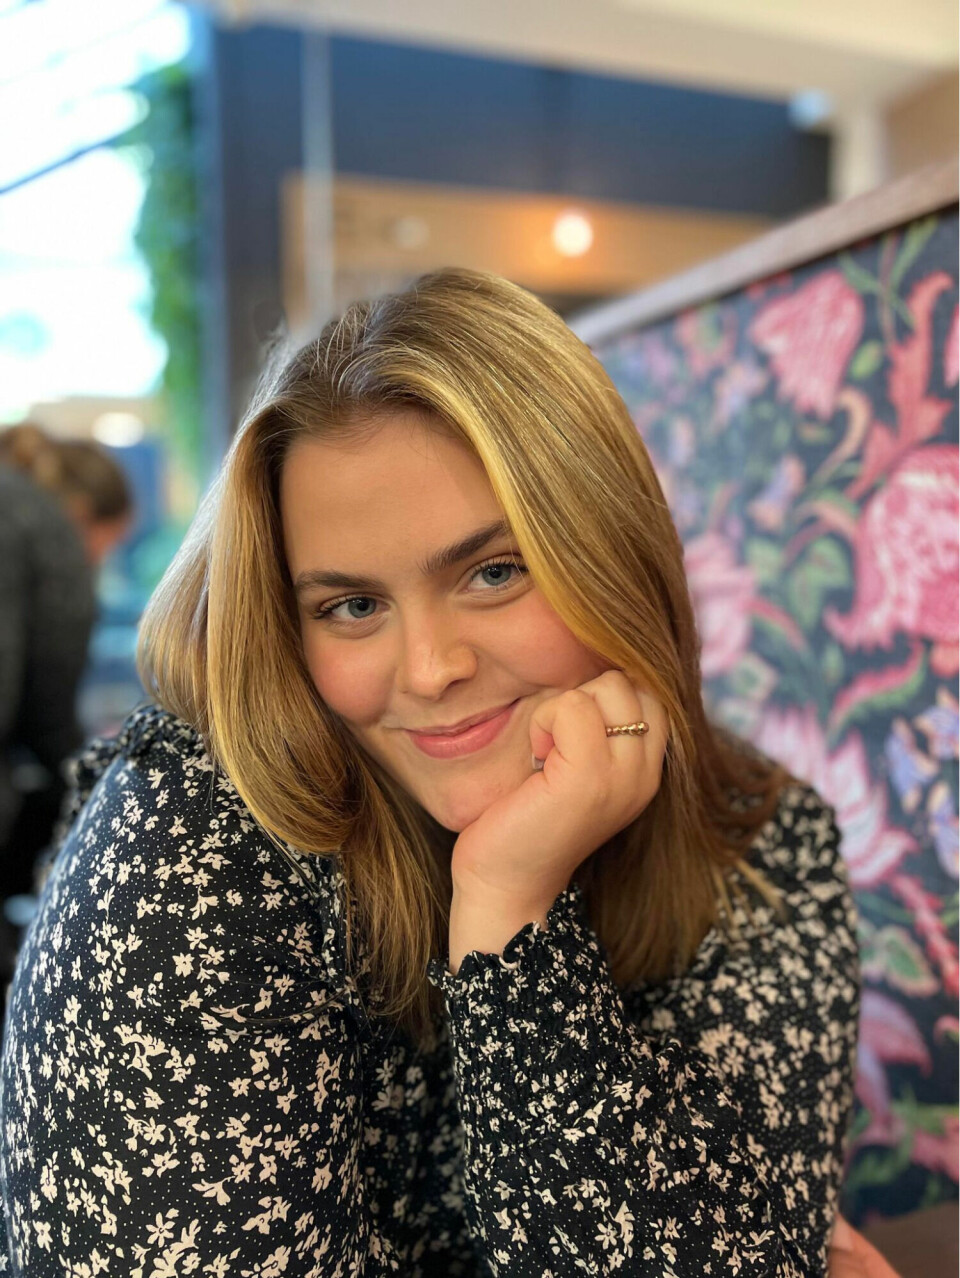 Emma Setså, 21, a student at OsloMet and a mother